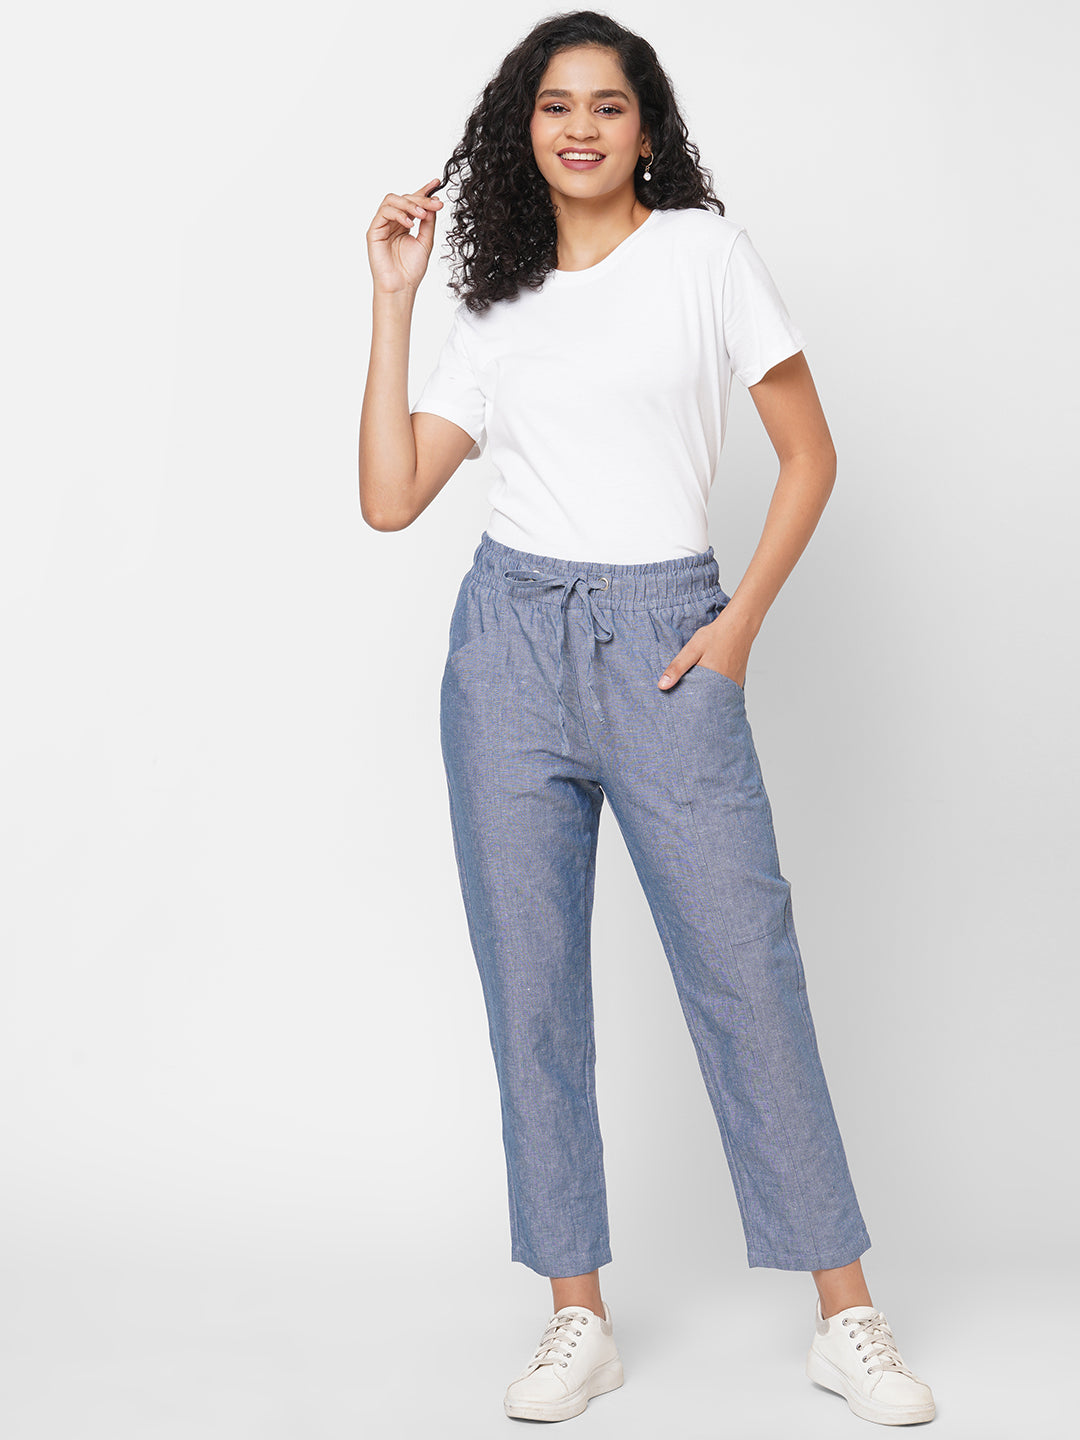 Buy Navy Blue Trousers  Pants for Women by ProEarth Online  Ajiocom